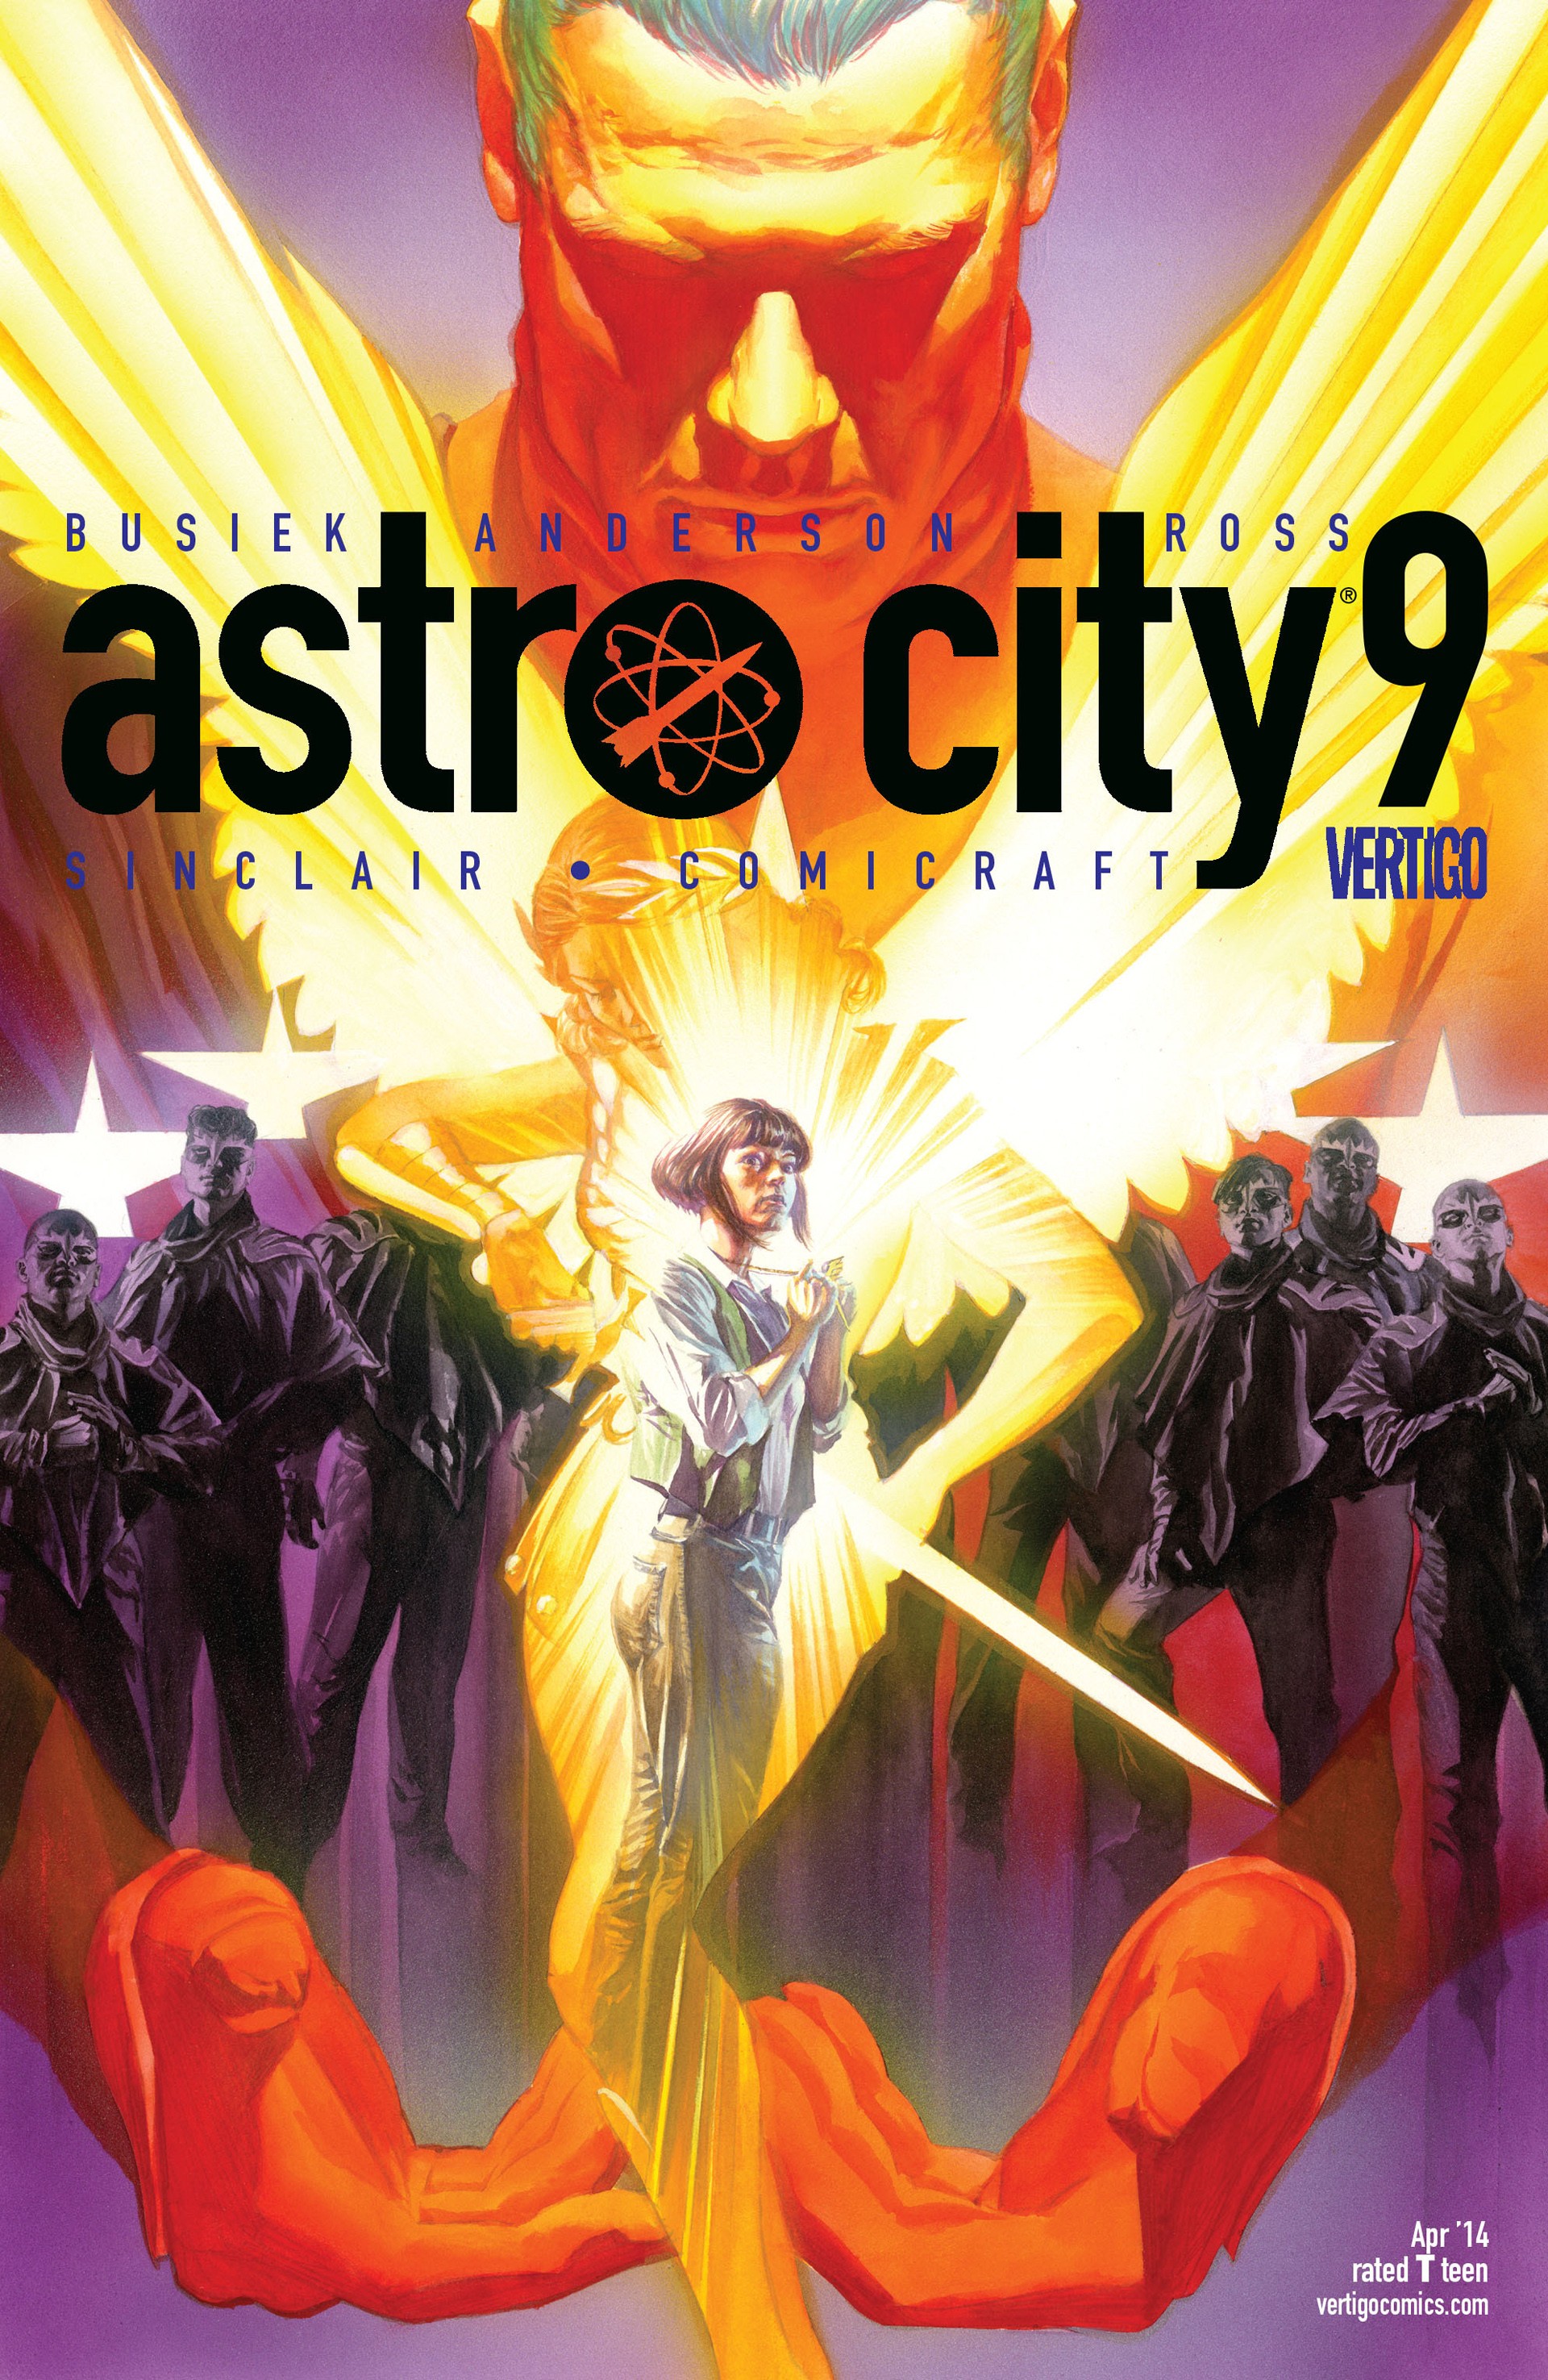 Astro City Vol. 3 #9